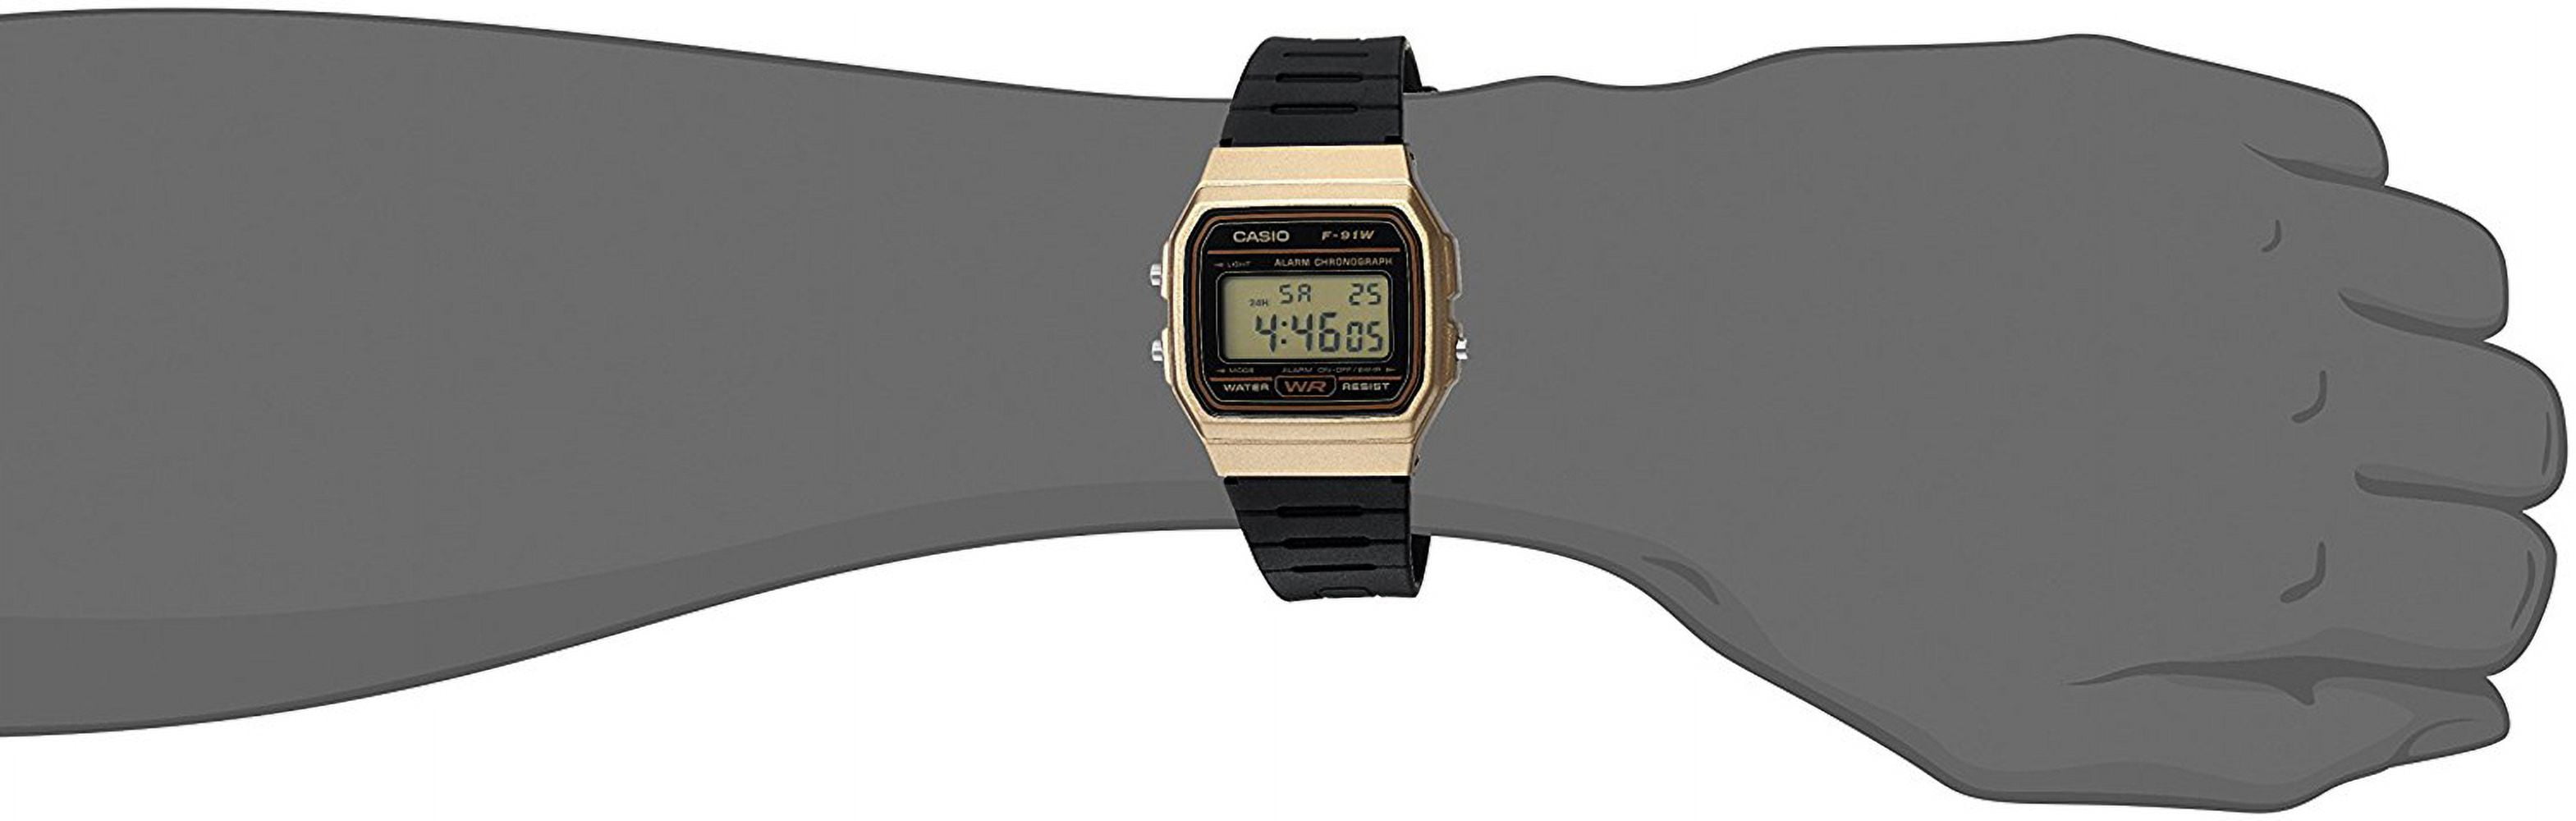 Casio F91W Gold Color Mens Wrist Watch Digital Alarm India